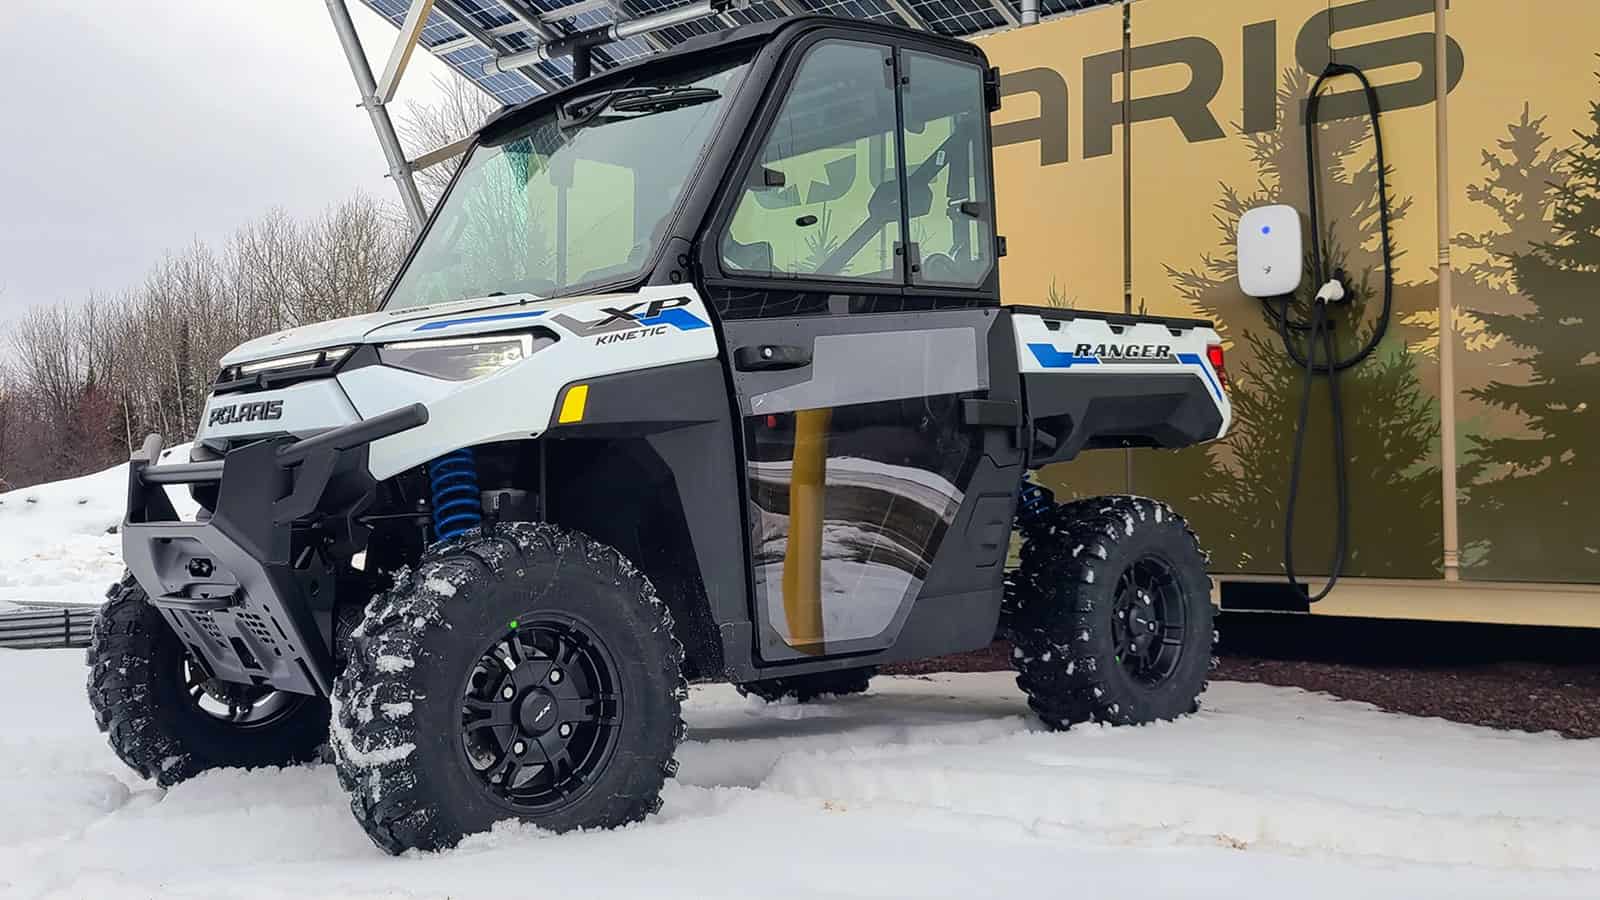 Polaris Kinetic XP Ranger electric ATV